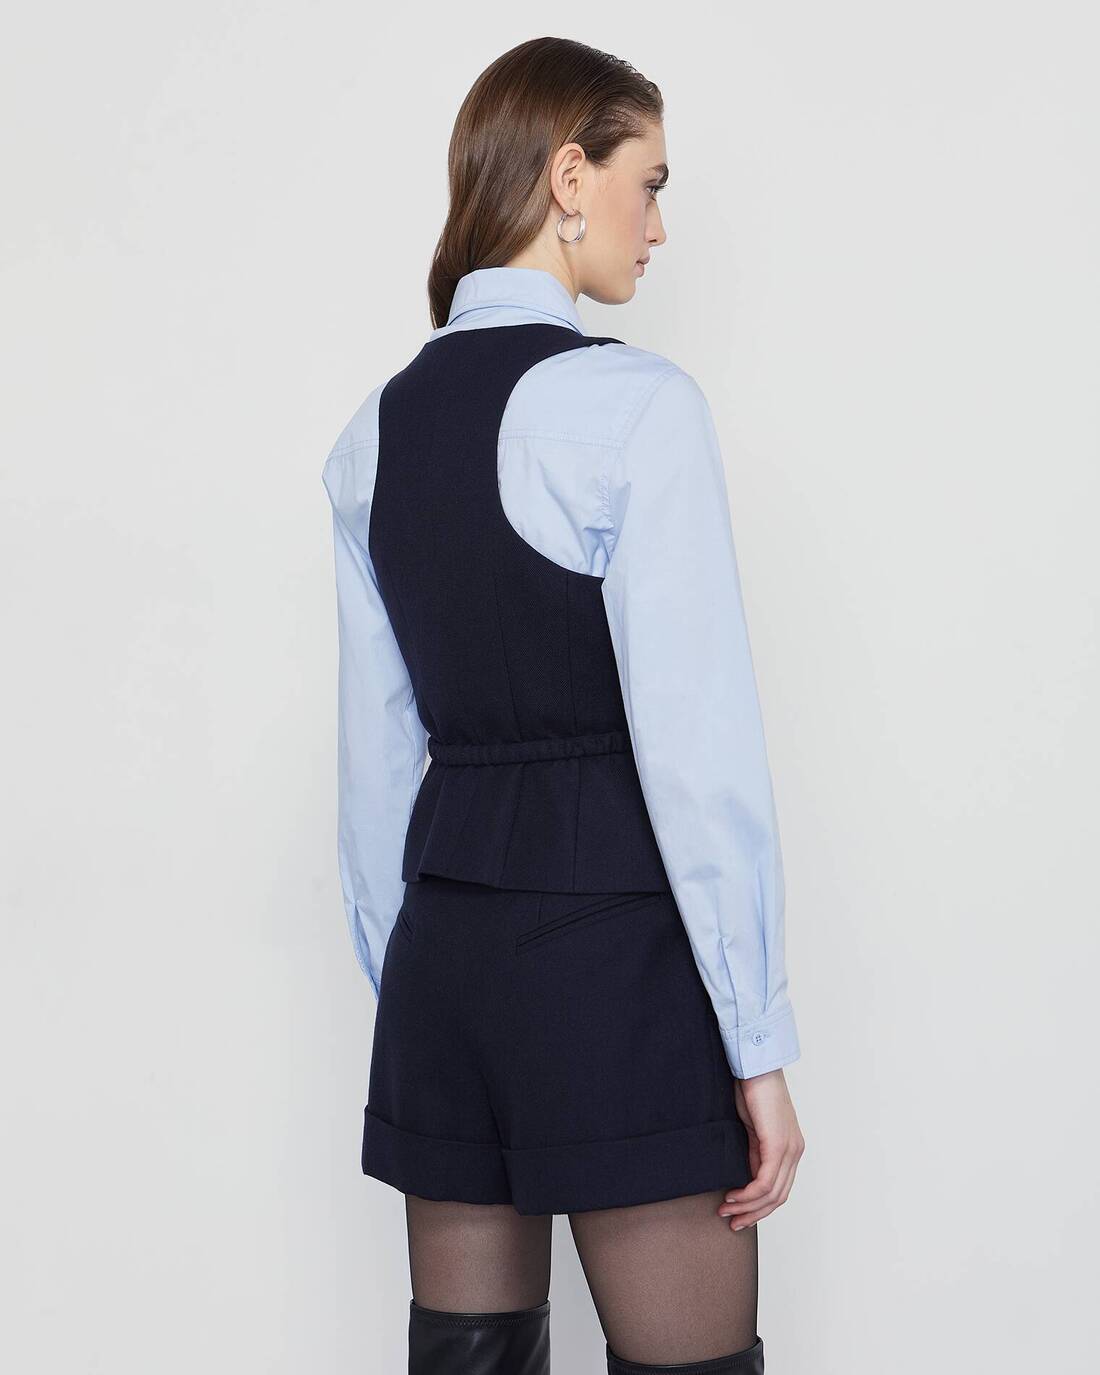 Wool fabric vest